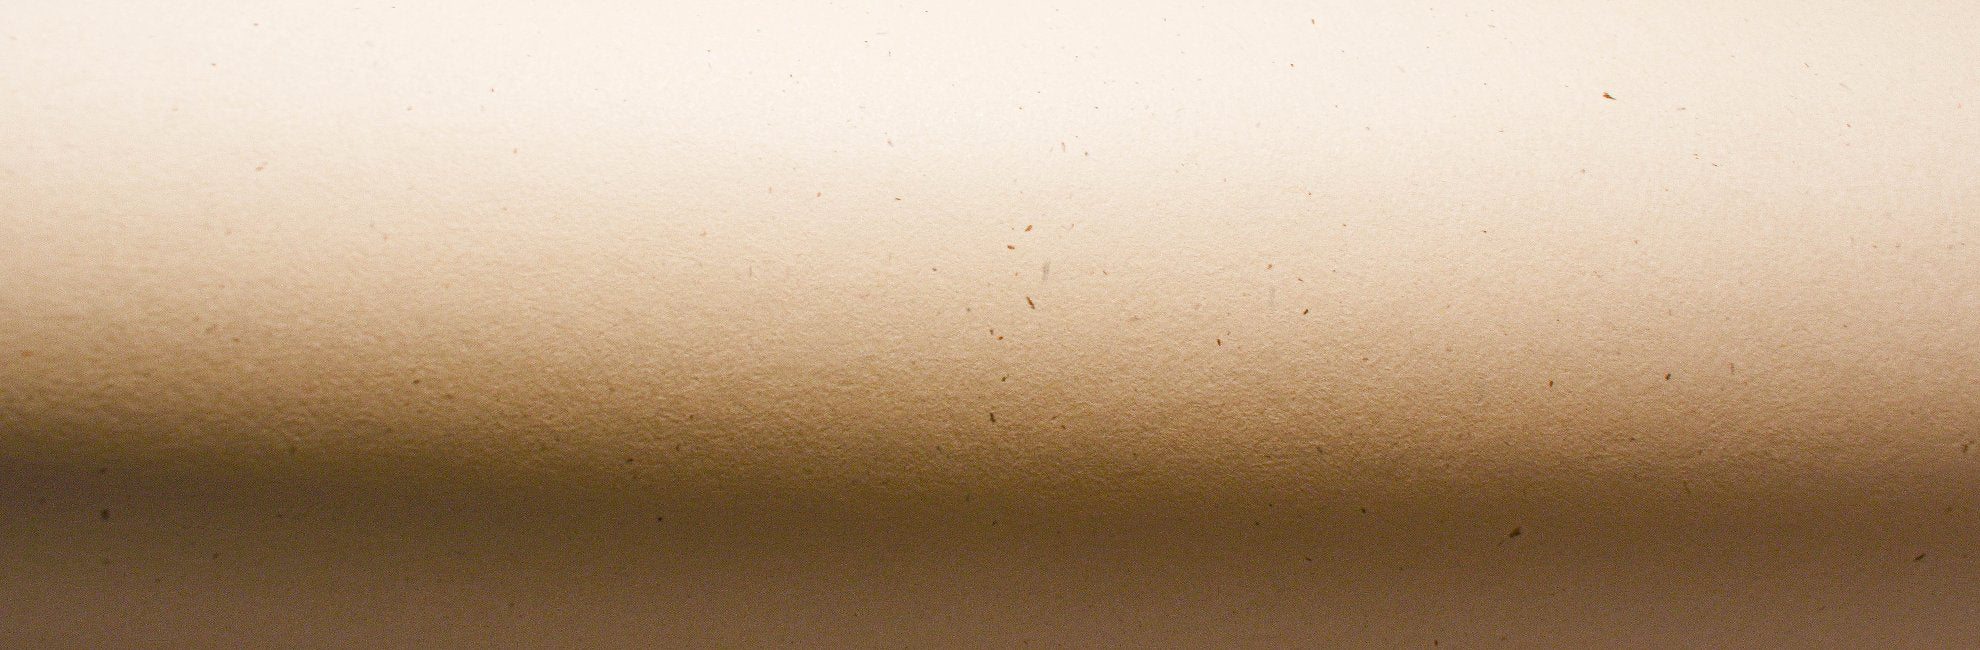 Enveloppe bulle brune recyclable E 22 x 26.5 cm